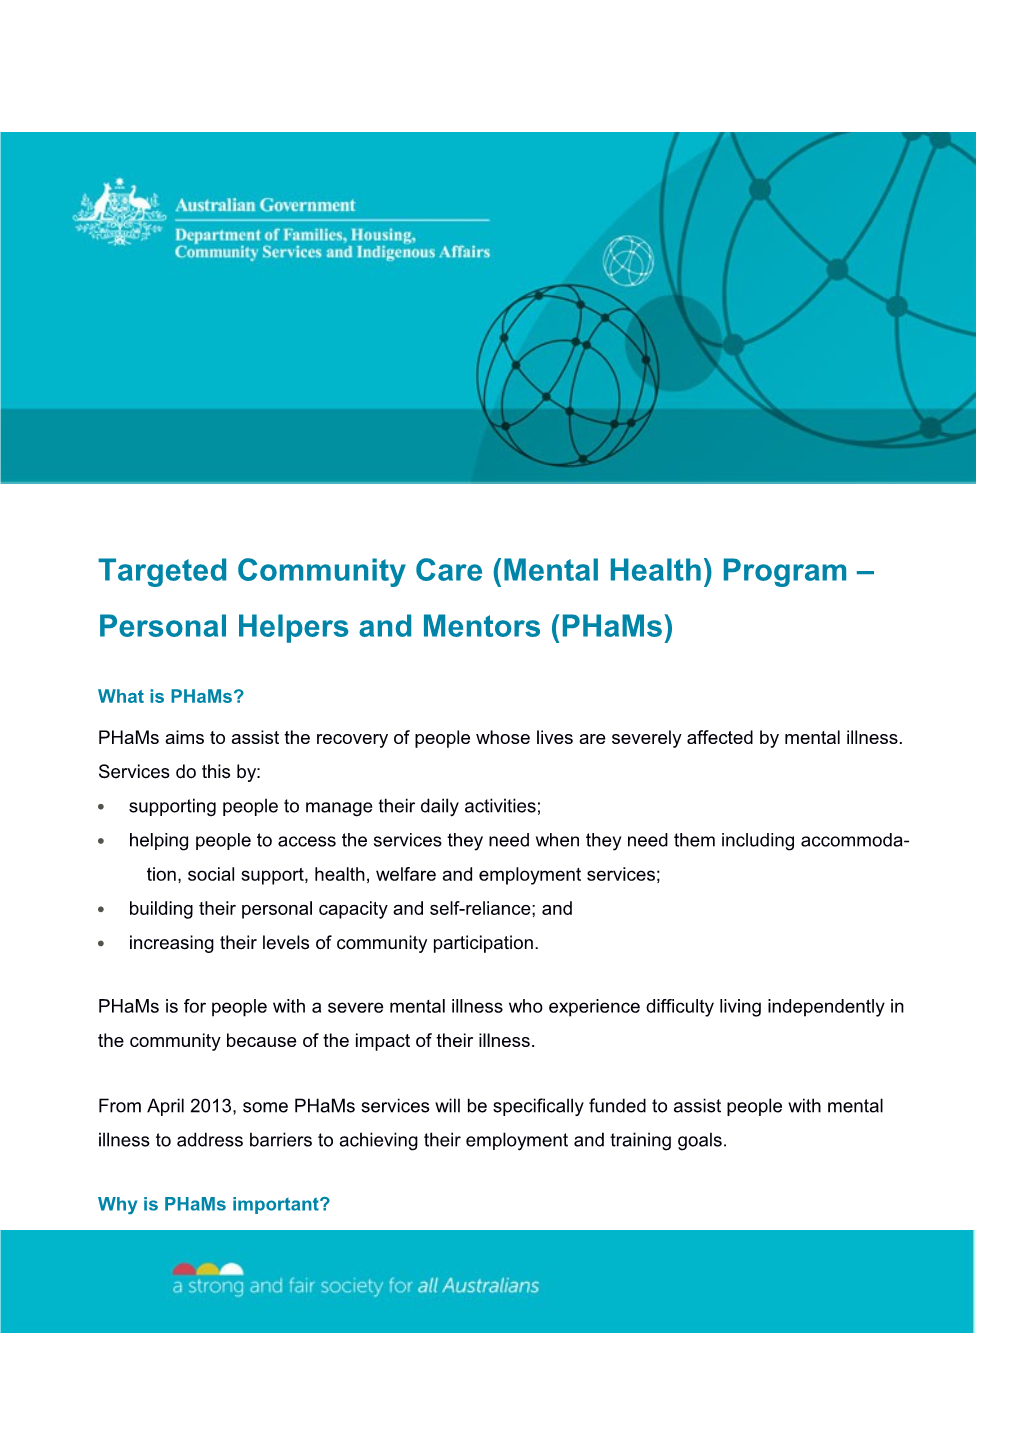 Targeted Community Care (Mental Health) Program Personal Helpers and Mentors (Phams)